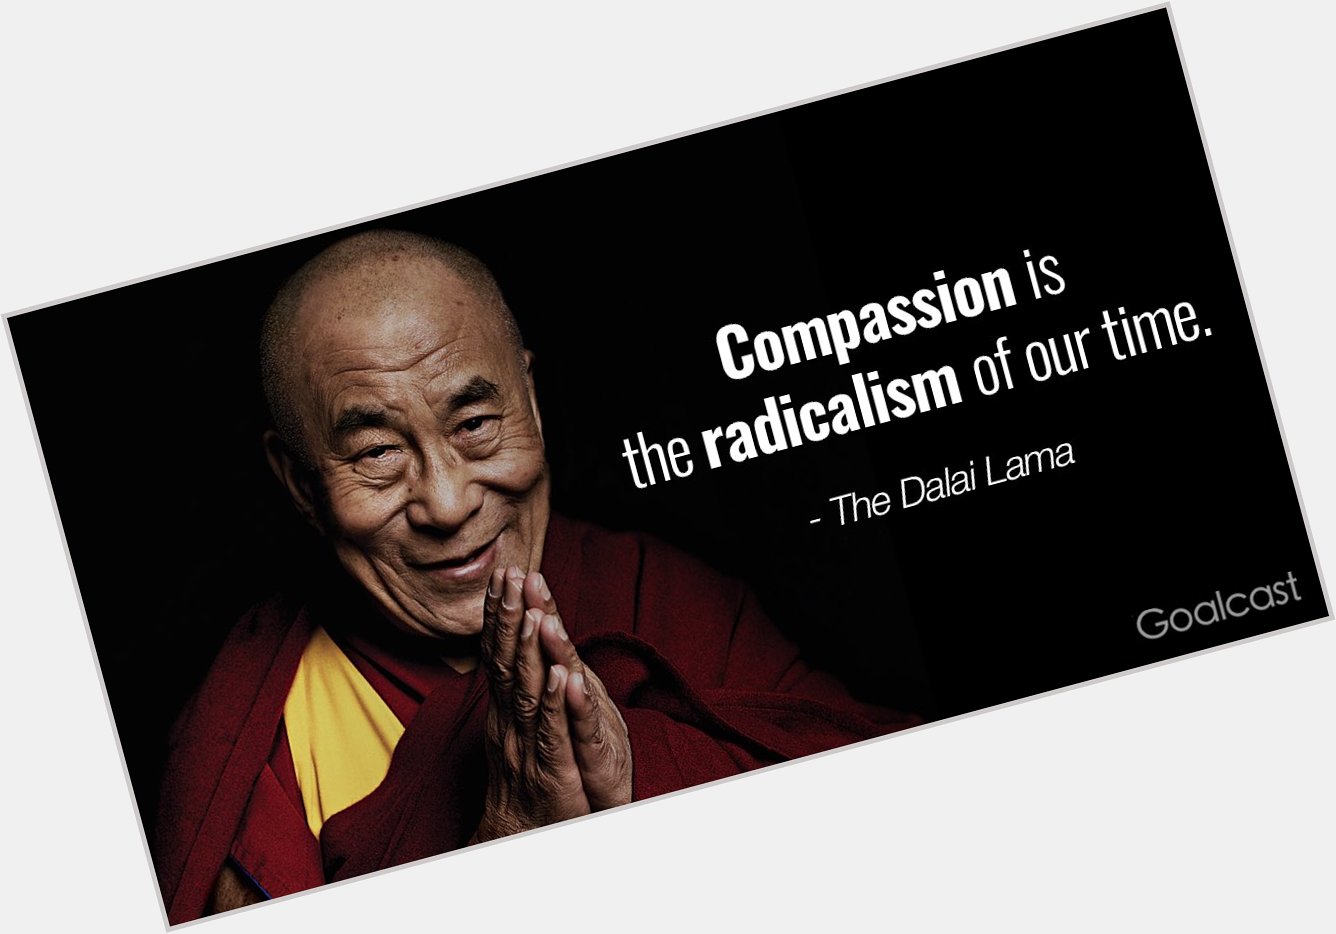 Happy 83 birthday to The Dalai Lama. Namaste 